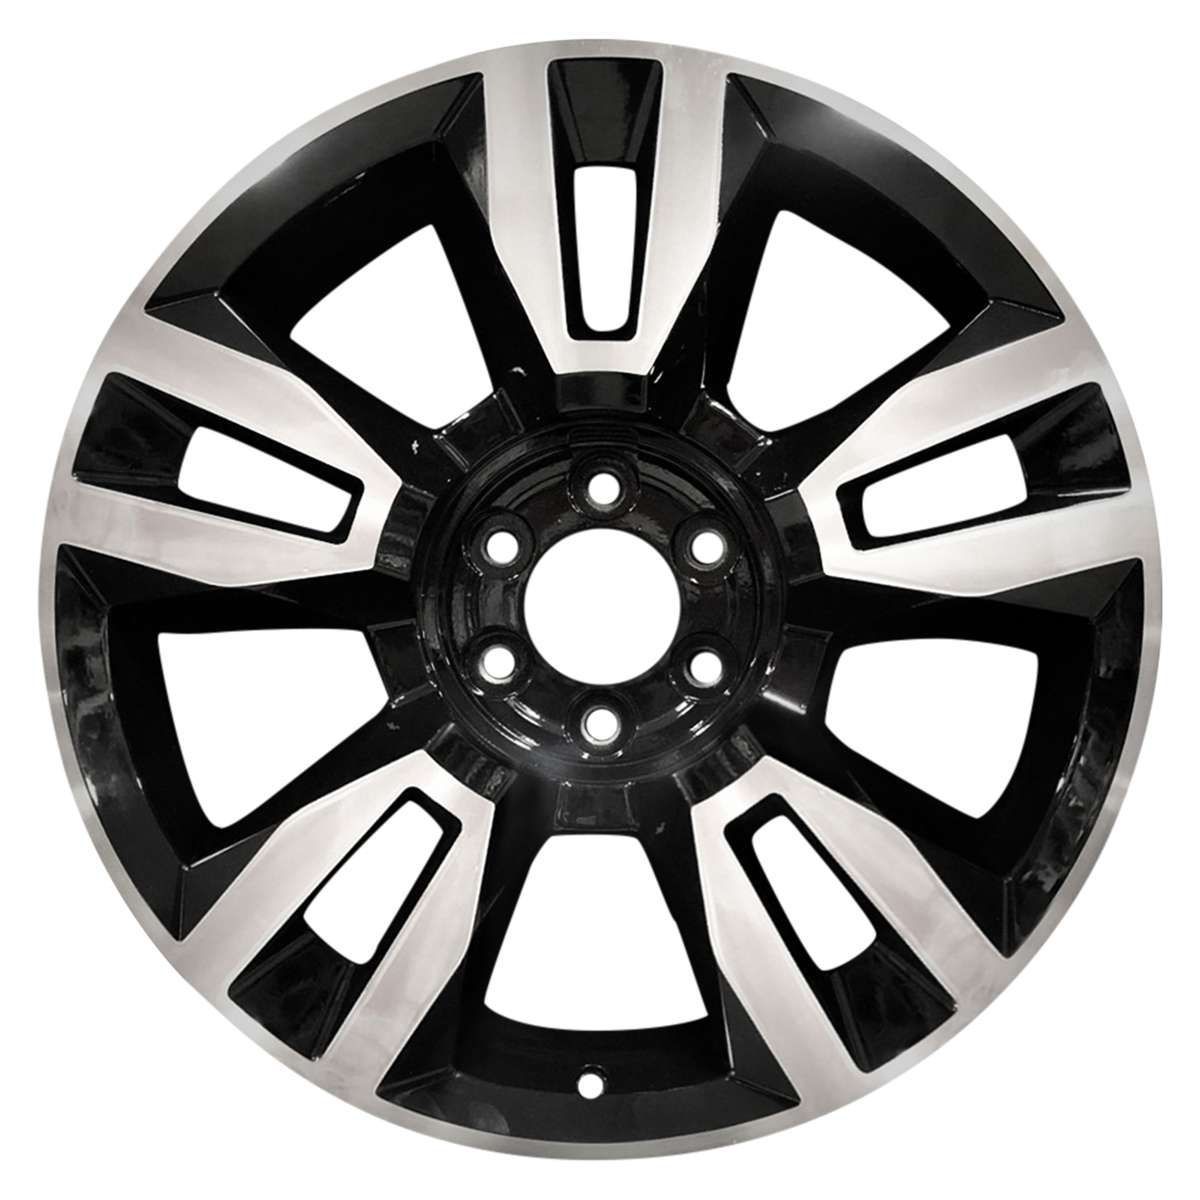 2019 Chevrolet Suburban 1500 New 22" Replacement Wheel Rim RW5821MB